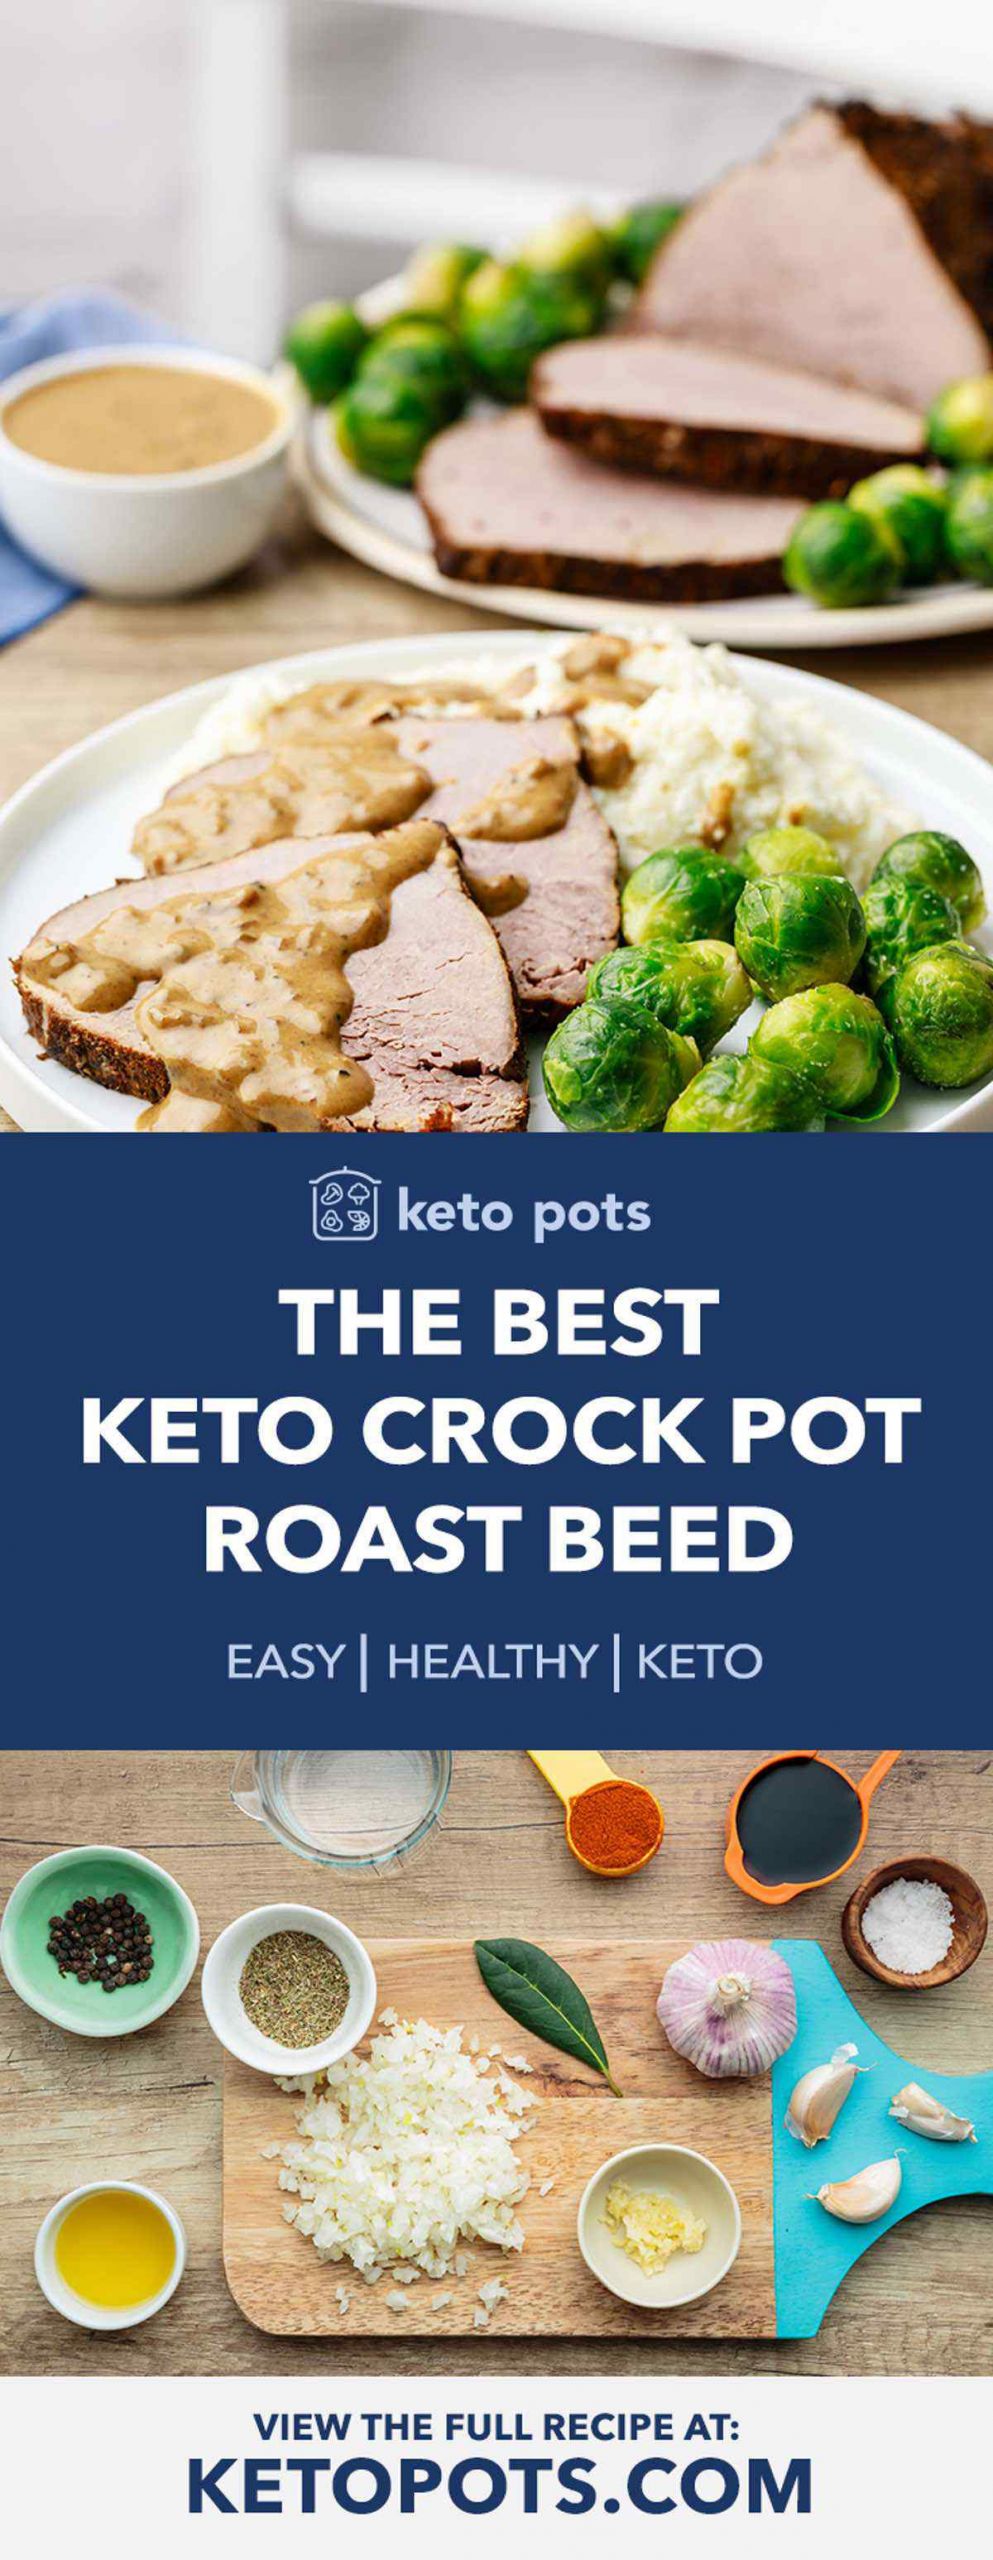 Crockpot Keto Roast
 The Most Tender Crockpot Roast Beef Ever Makes the Best